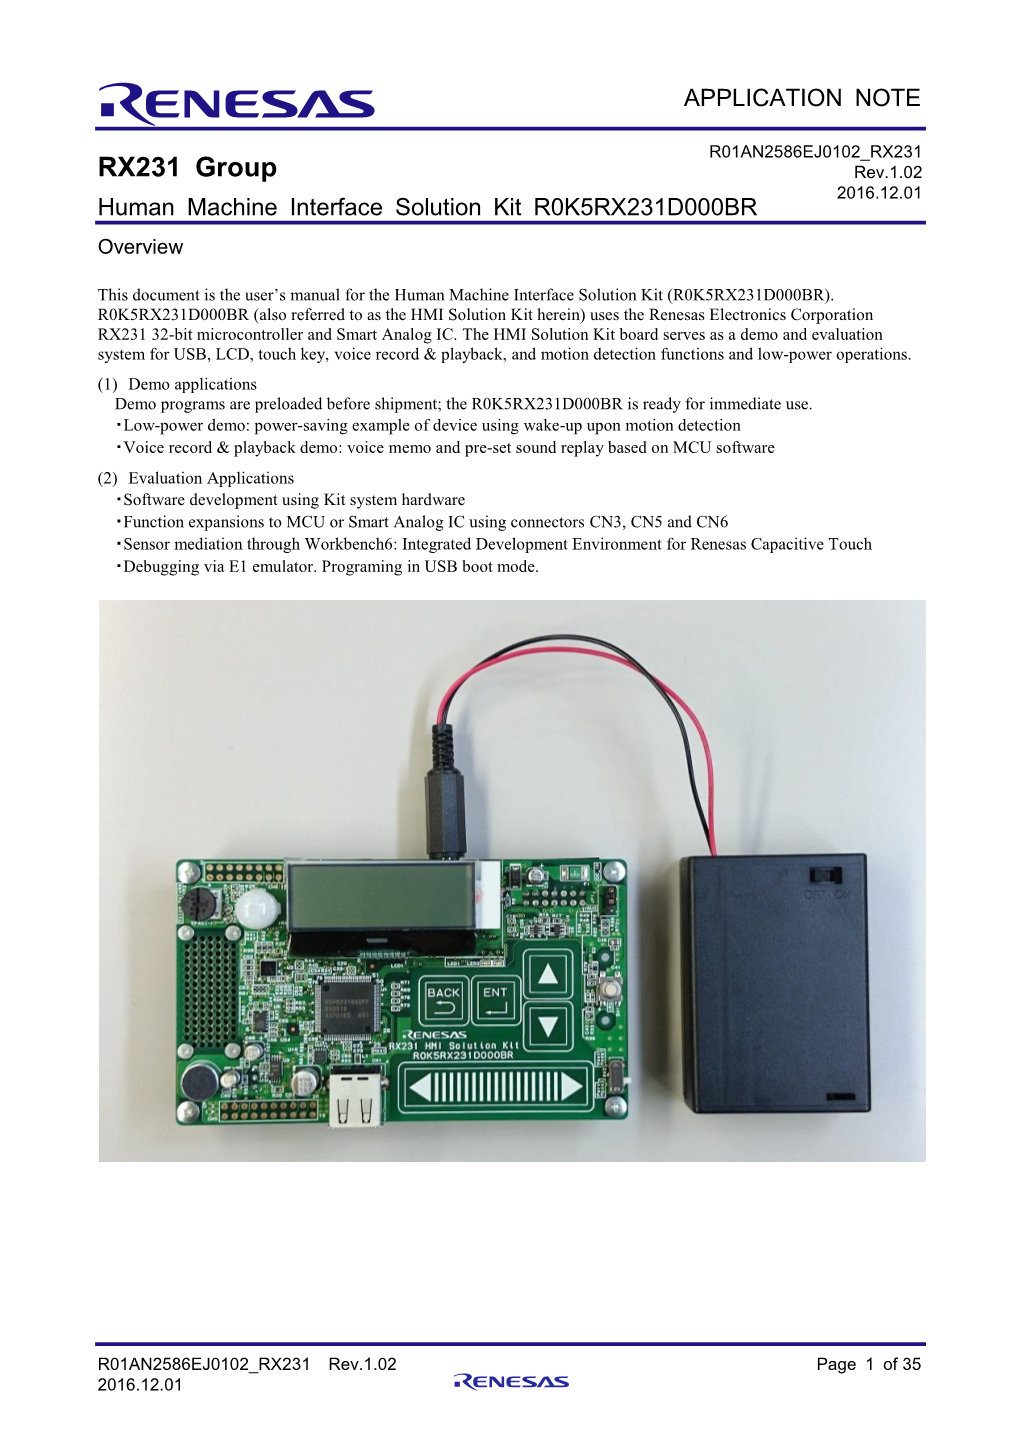 Human Machine Interface Solution Kit R0K5RX231D000BR Overview